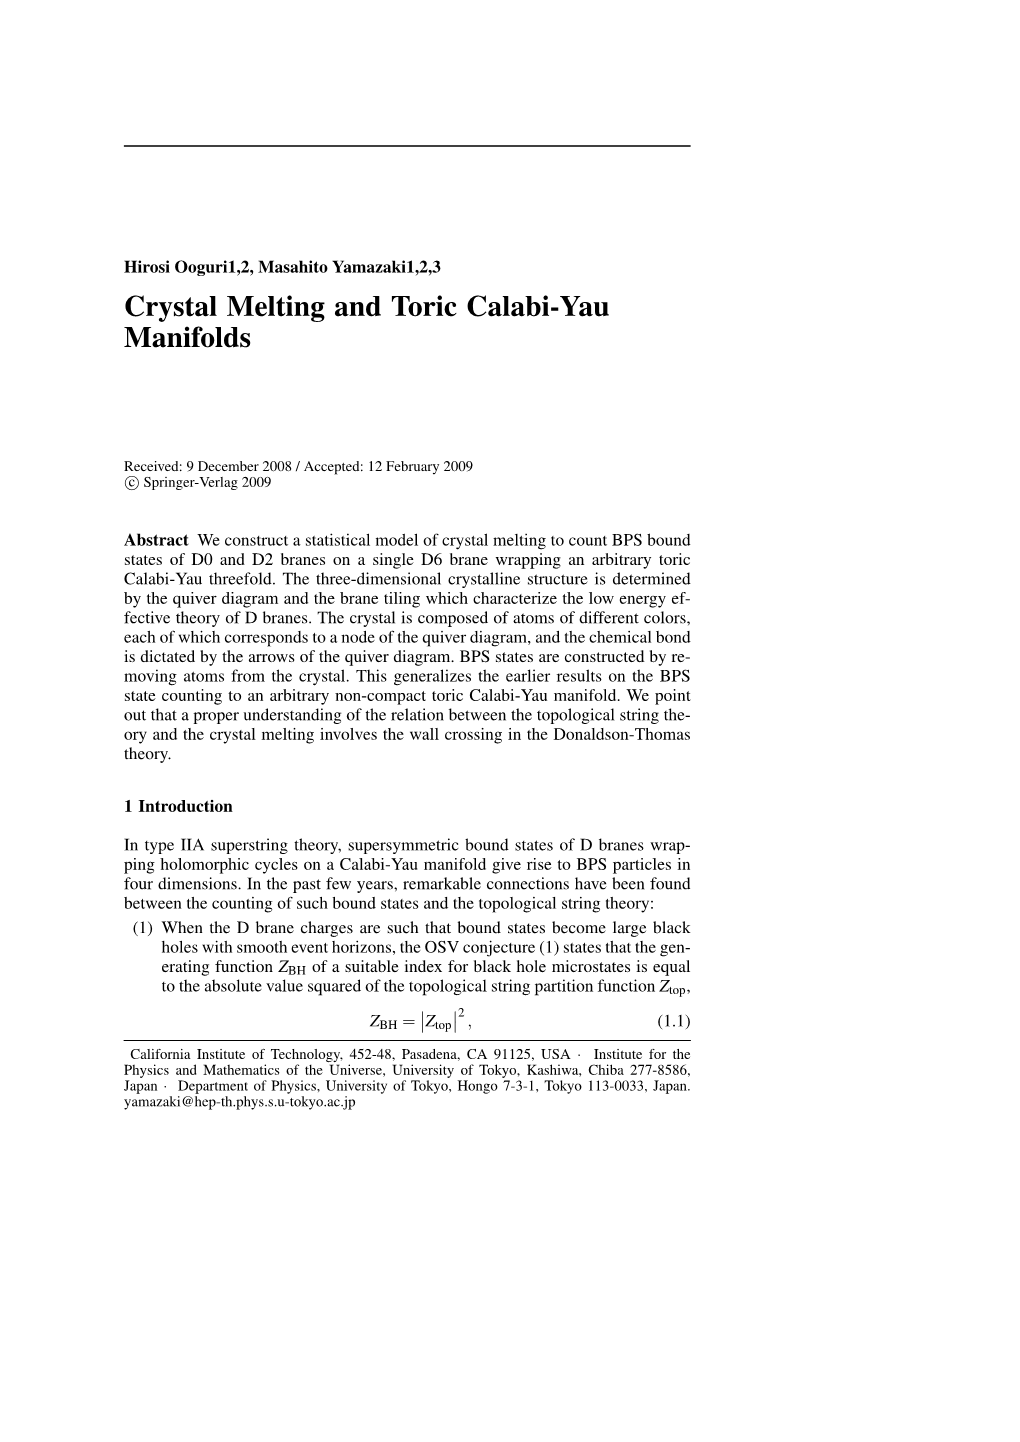 Crystal Melting and Toric Calabi-Yau Manifolds